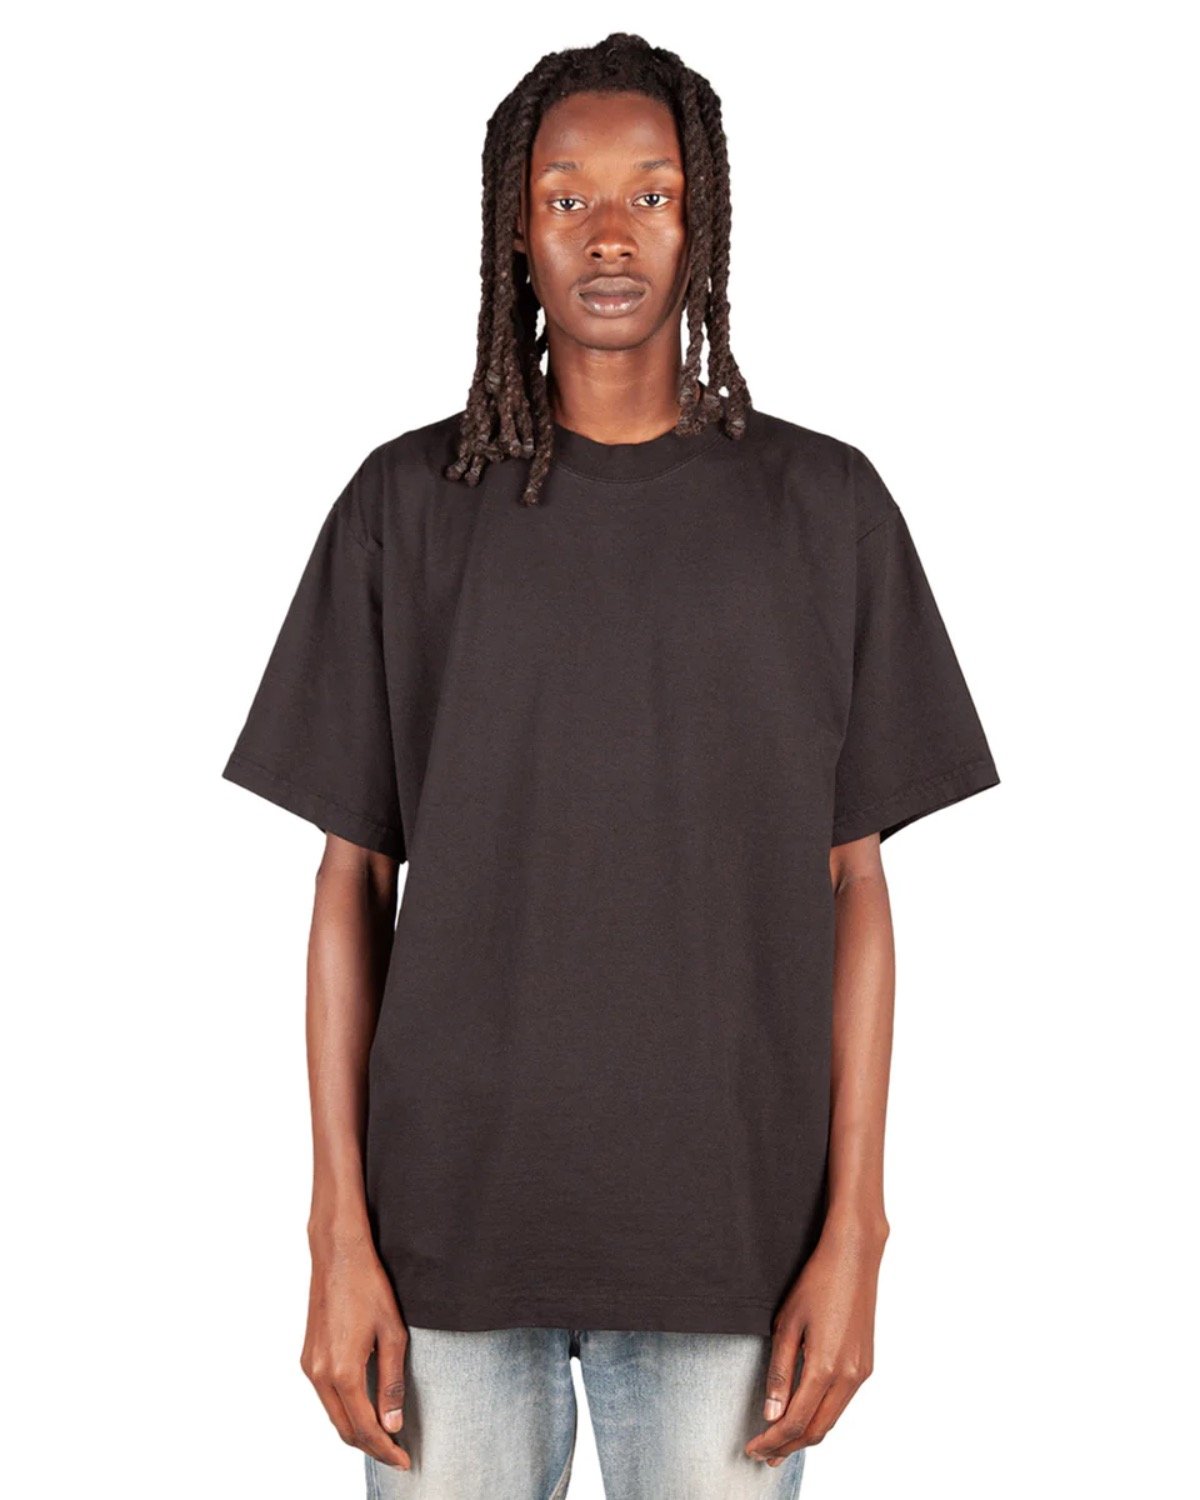 Shaka Wear Shgdz - Men's Garment Dye Double-Zip Hooded Sweatshirt Black - S